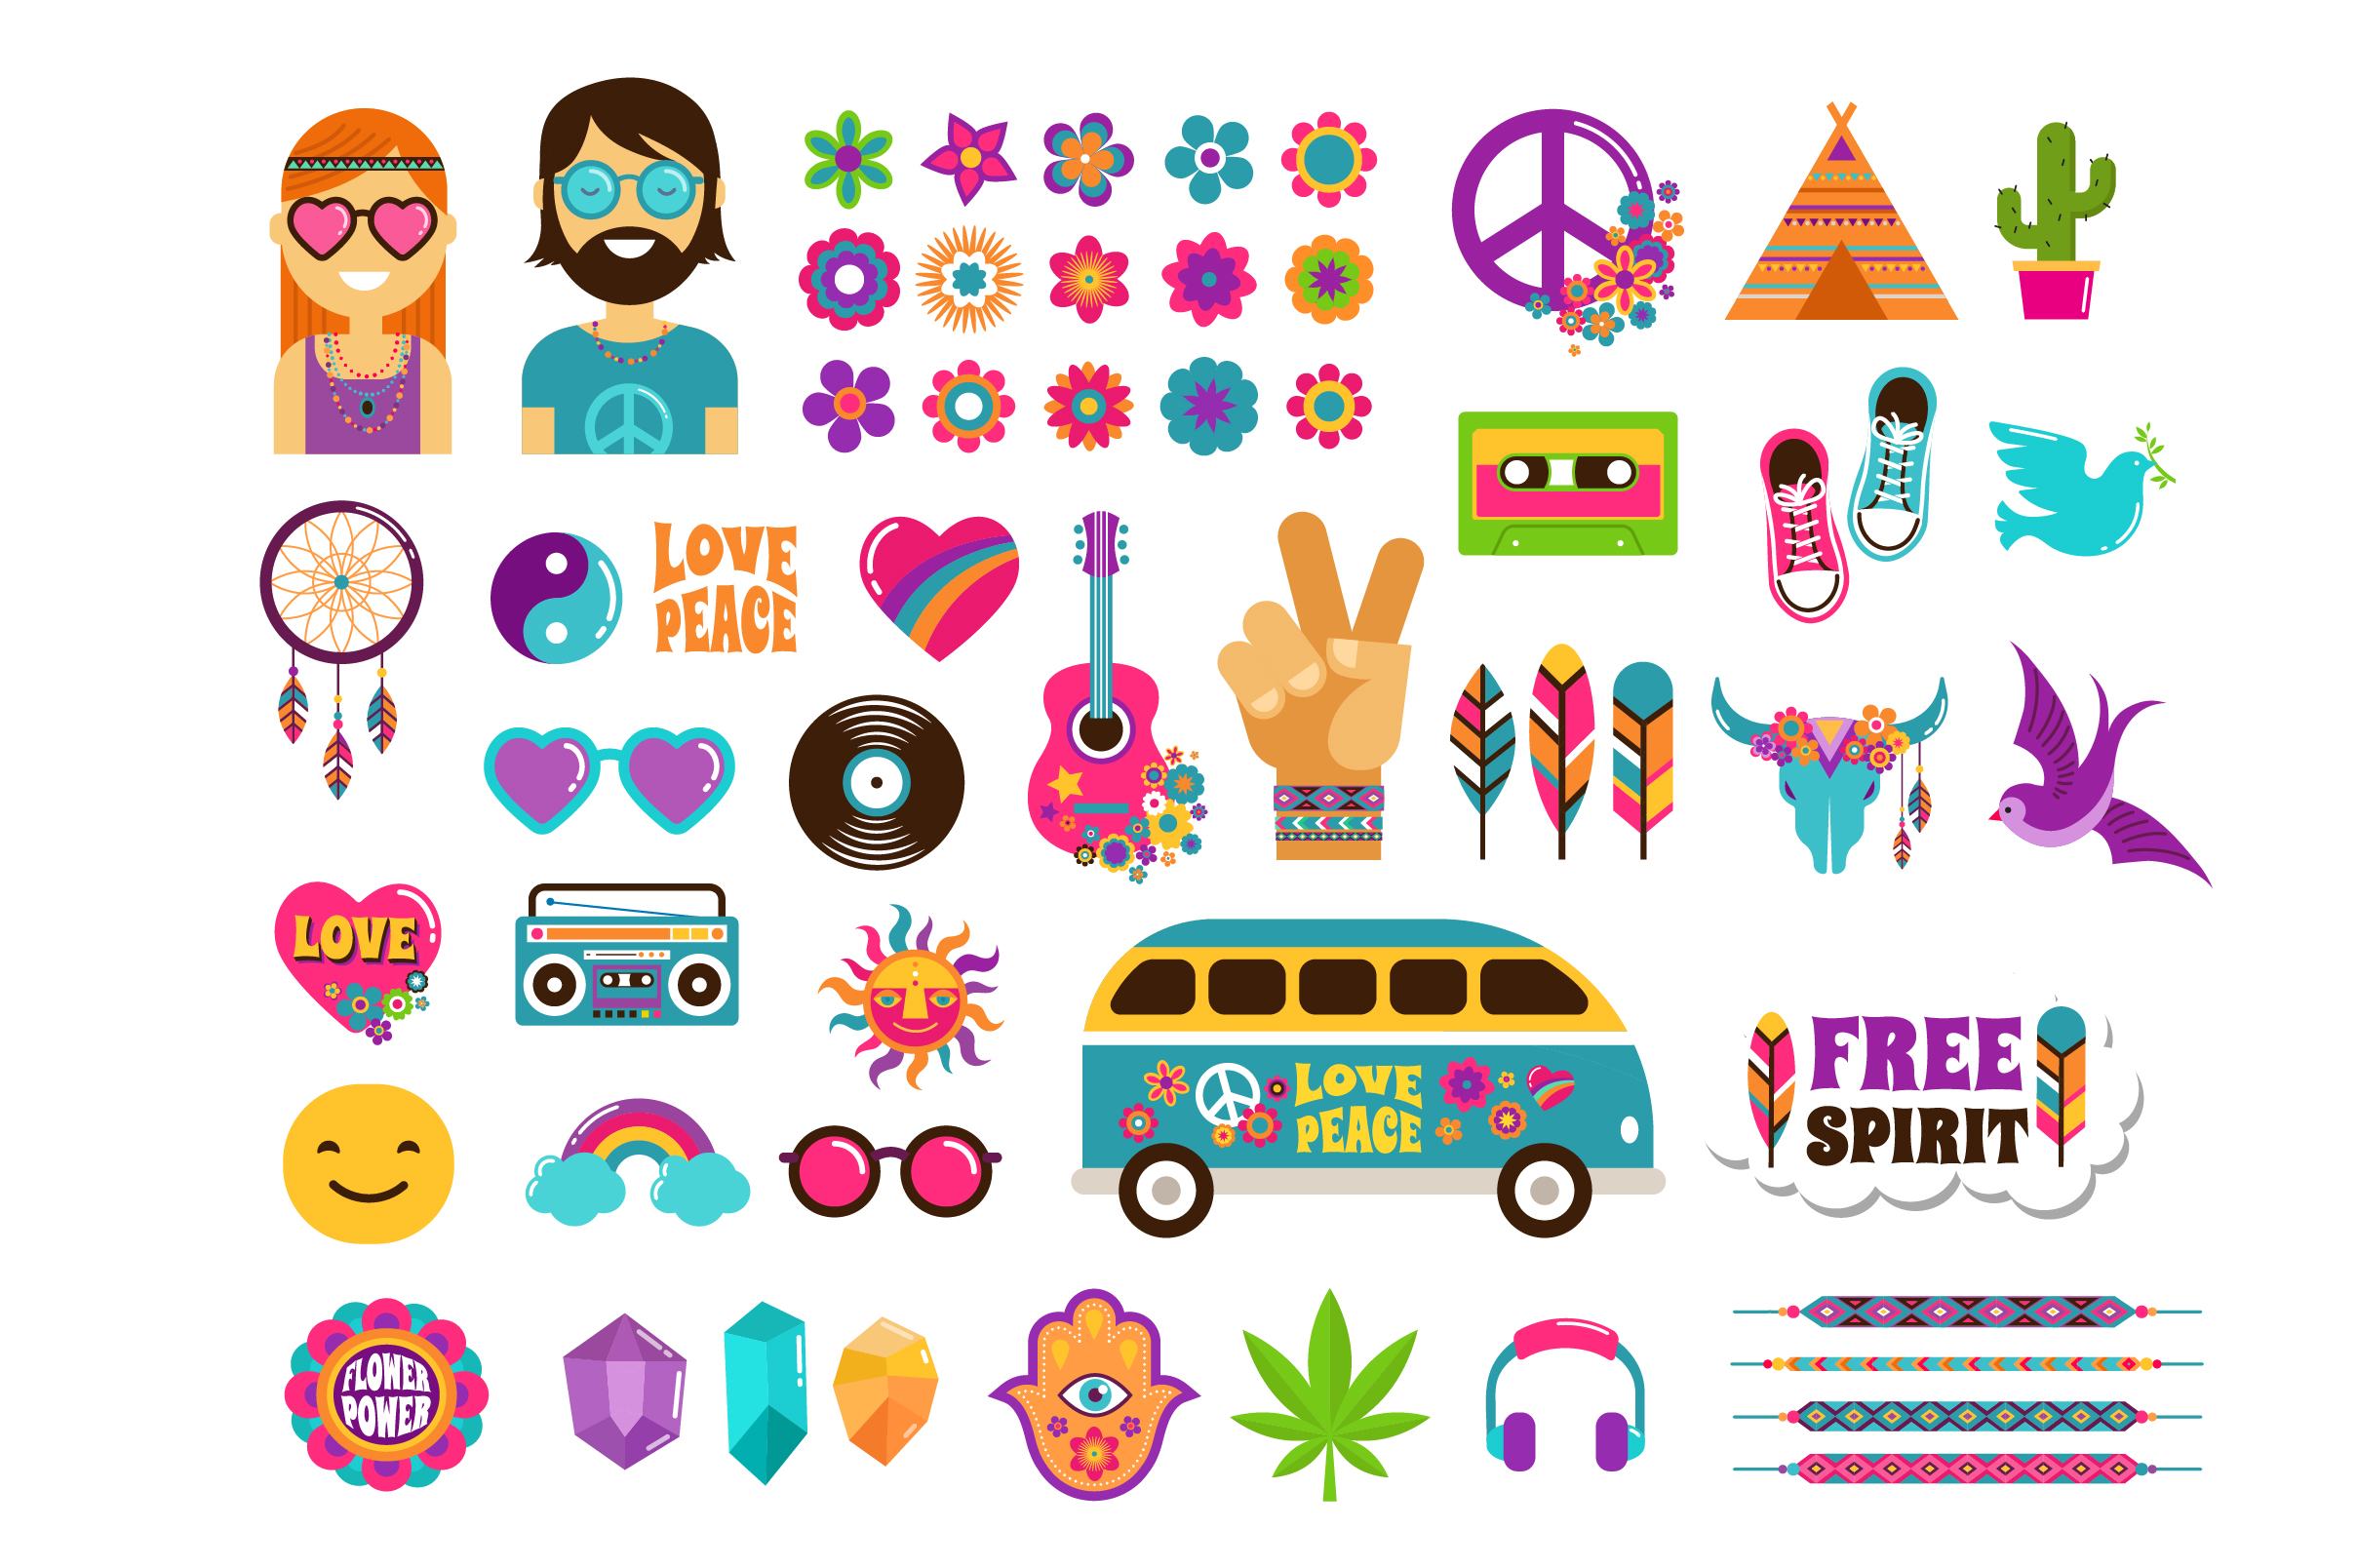 Hippie, 60's, Boho stickers, icons